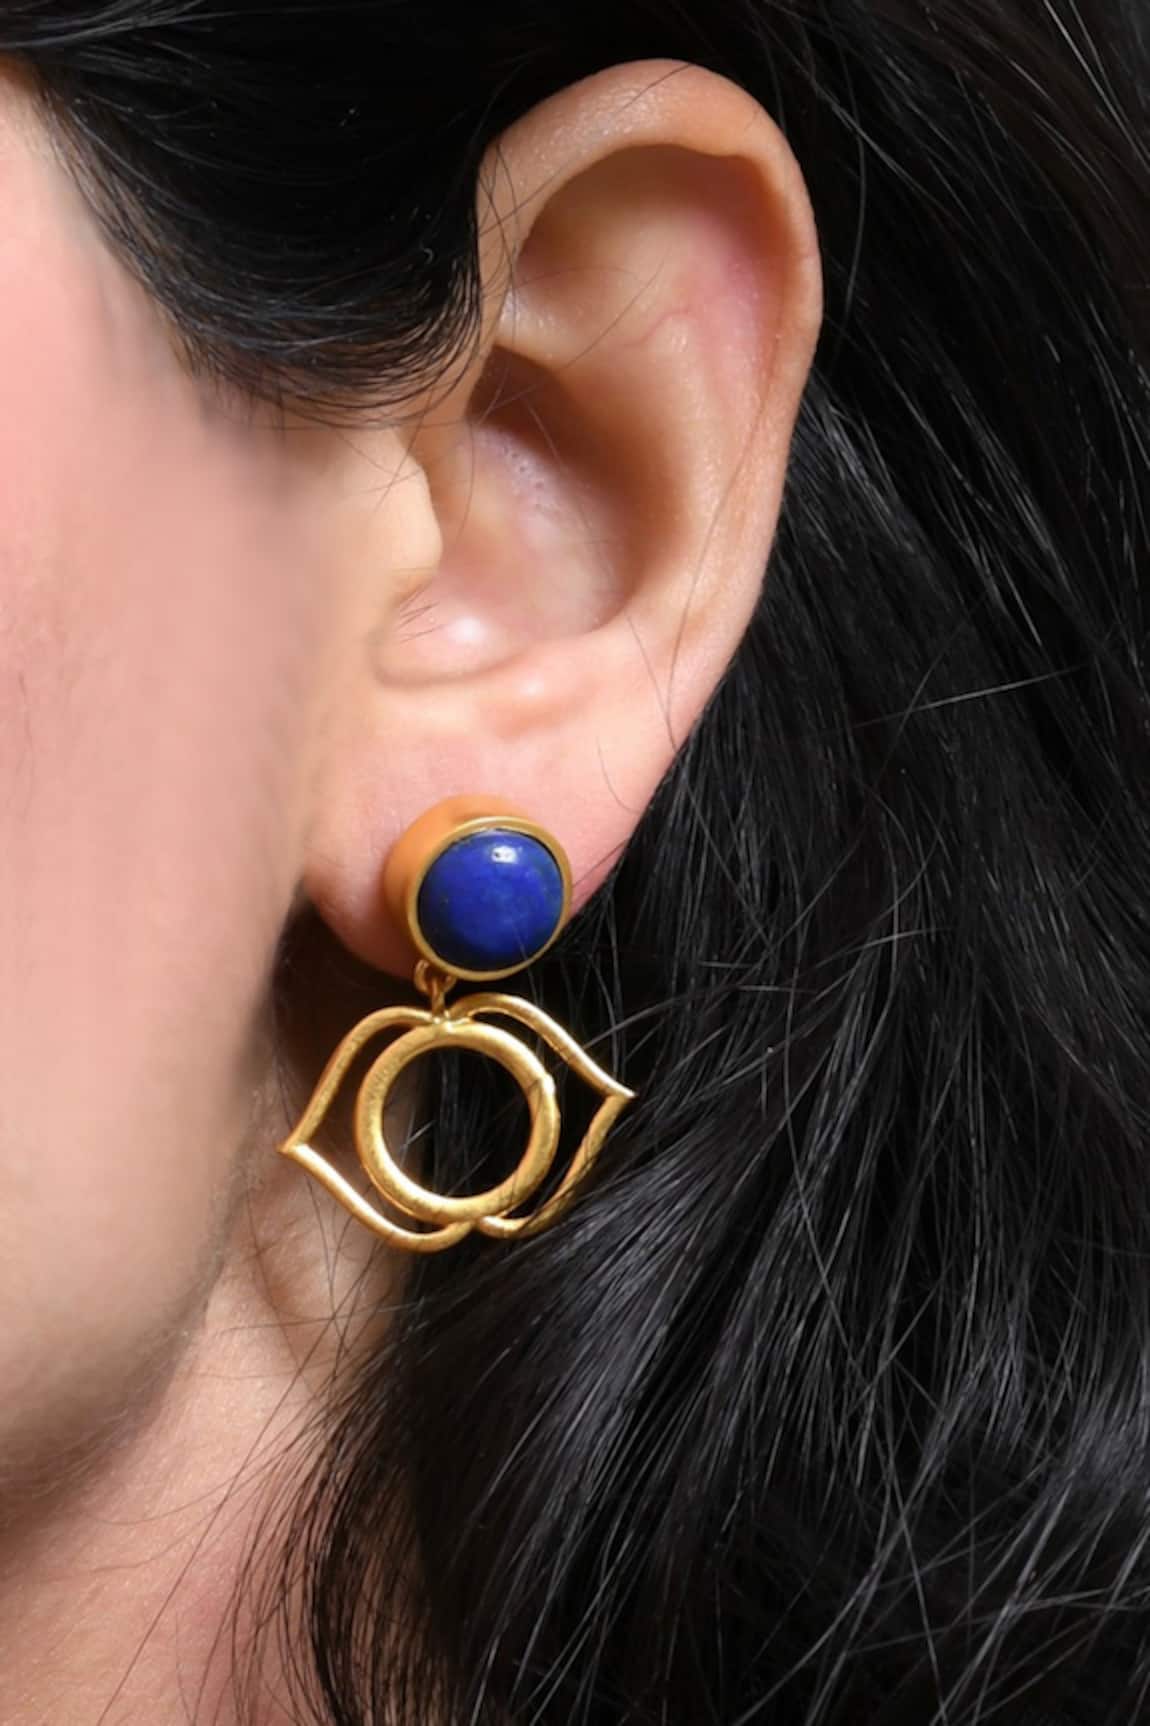 Totapari Third Eye Chakra Embellished Dangler Earrings